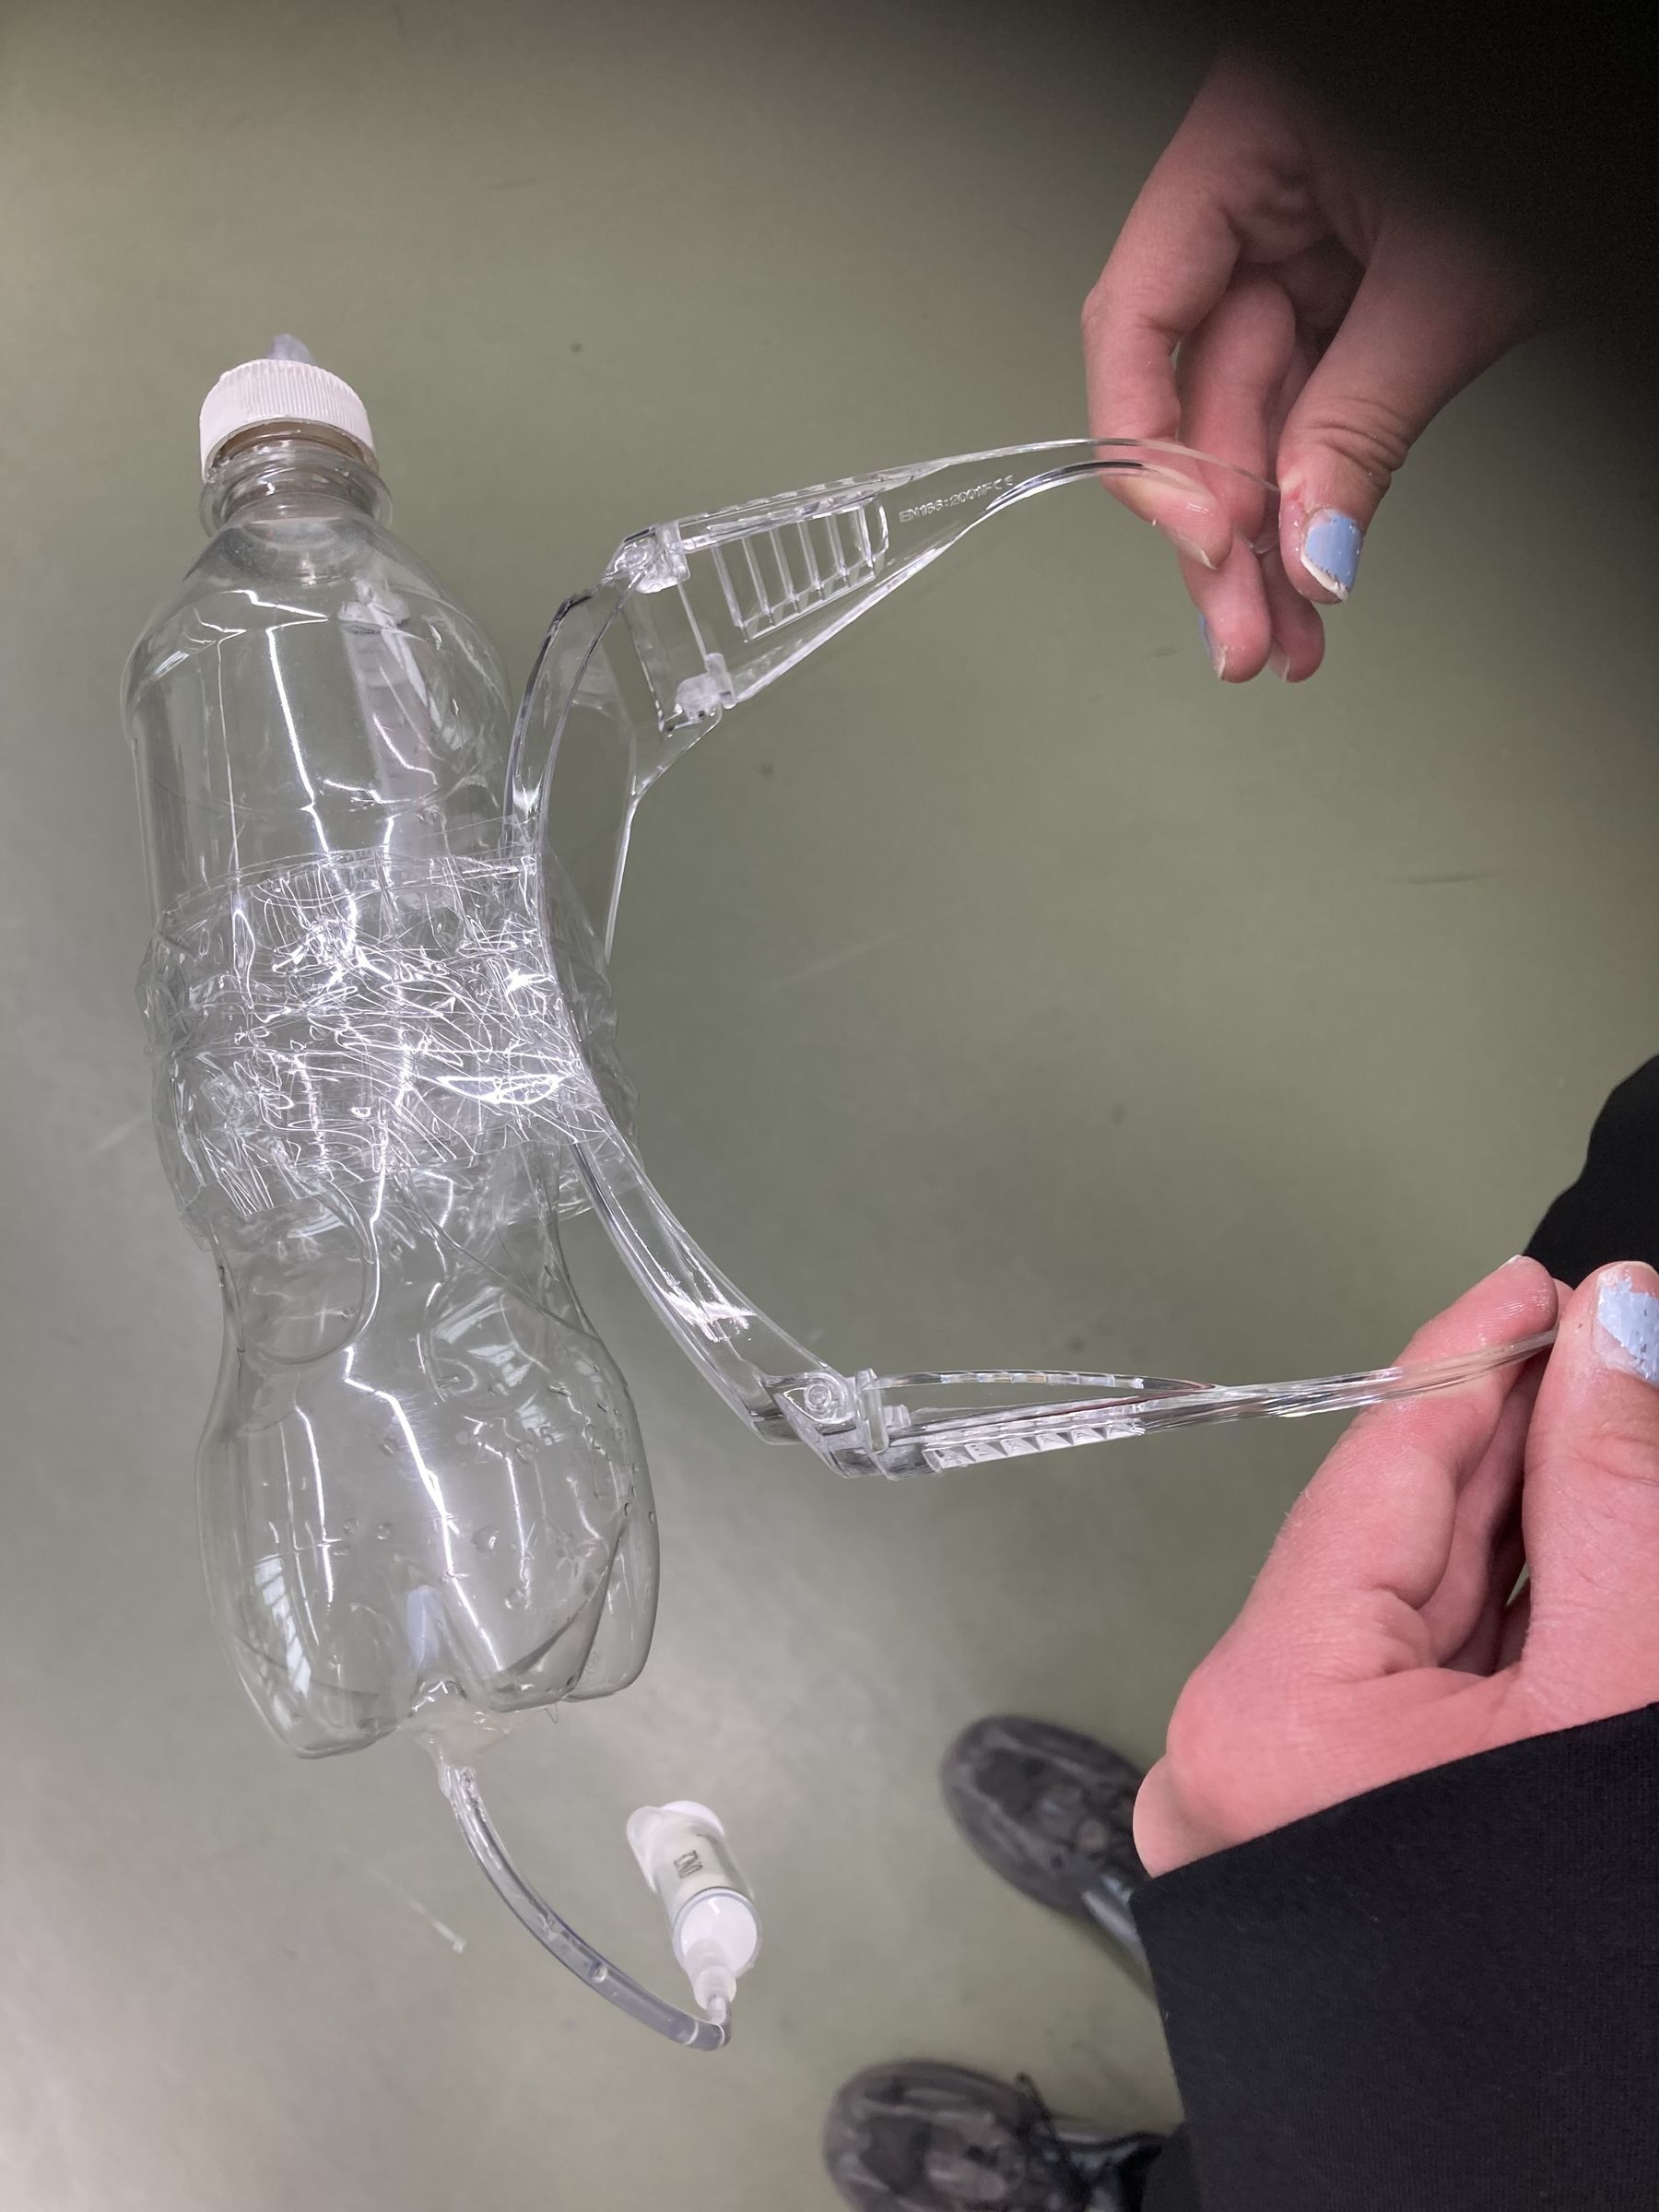 Water bottle taped onto plastic glasses.